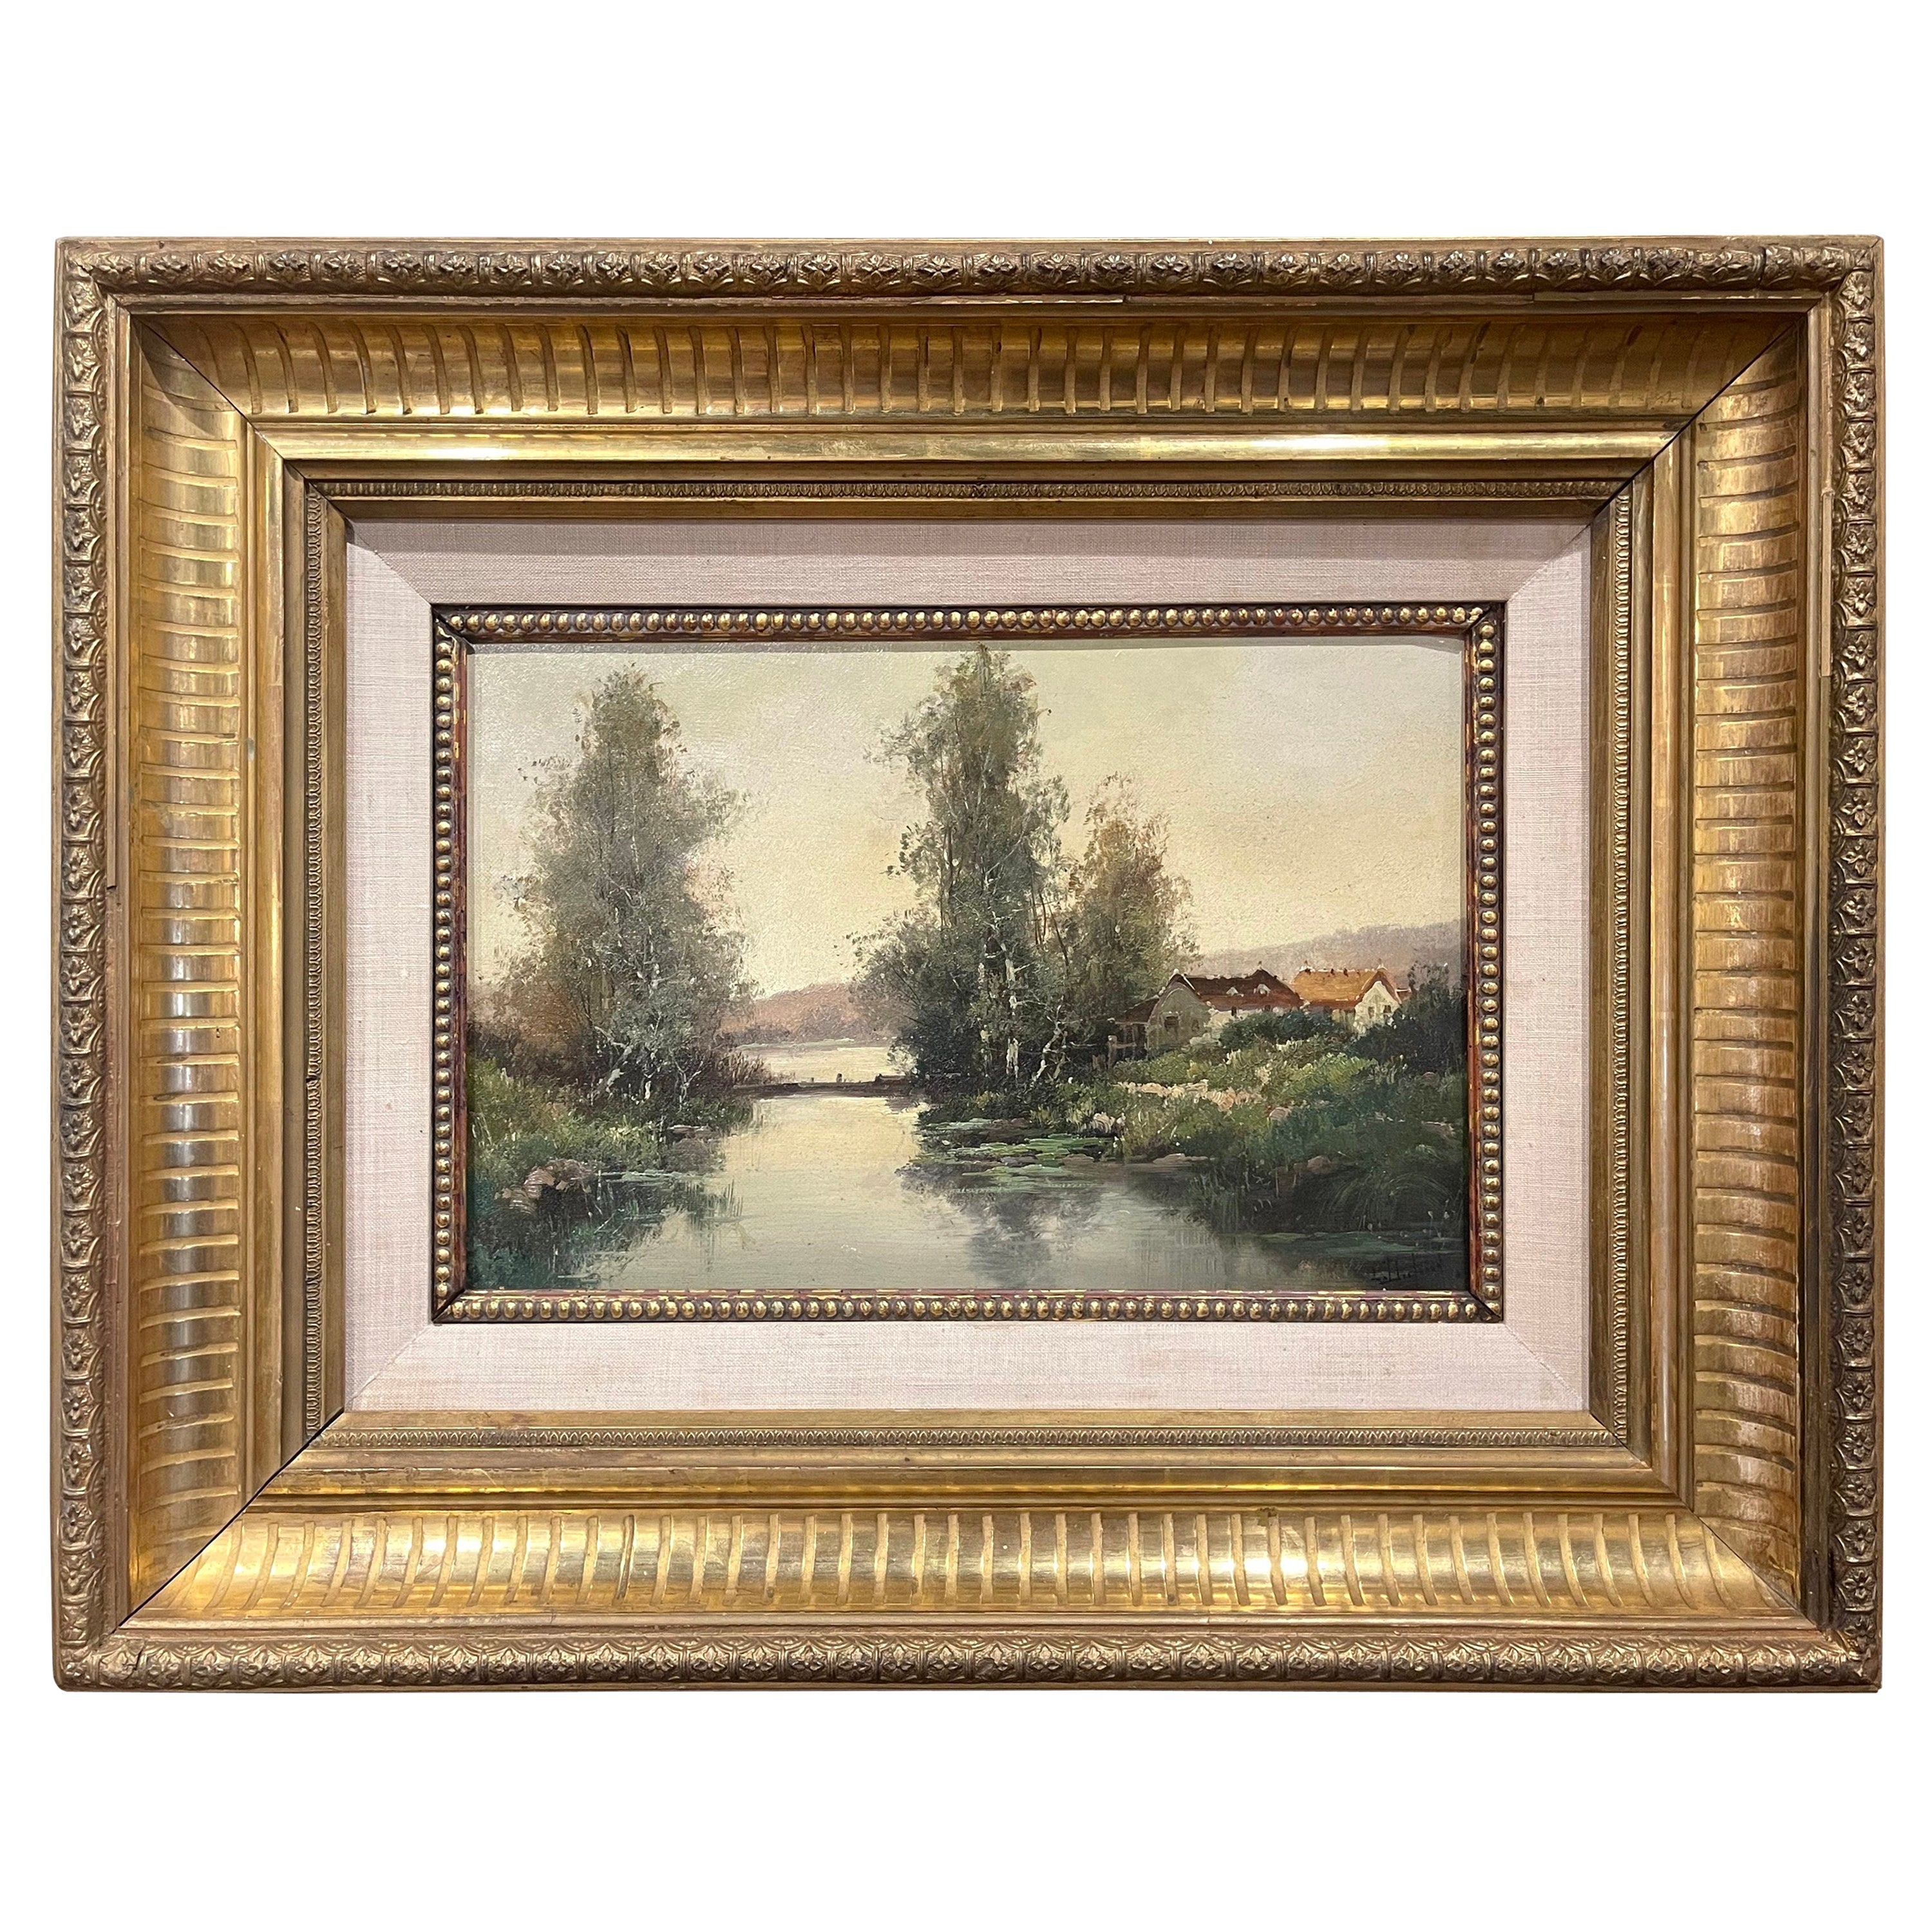 19th Century Framed Landscape Oil Painting Signed L. Dupuy for E. Galien-Laloue